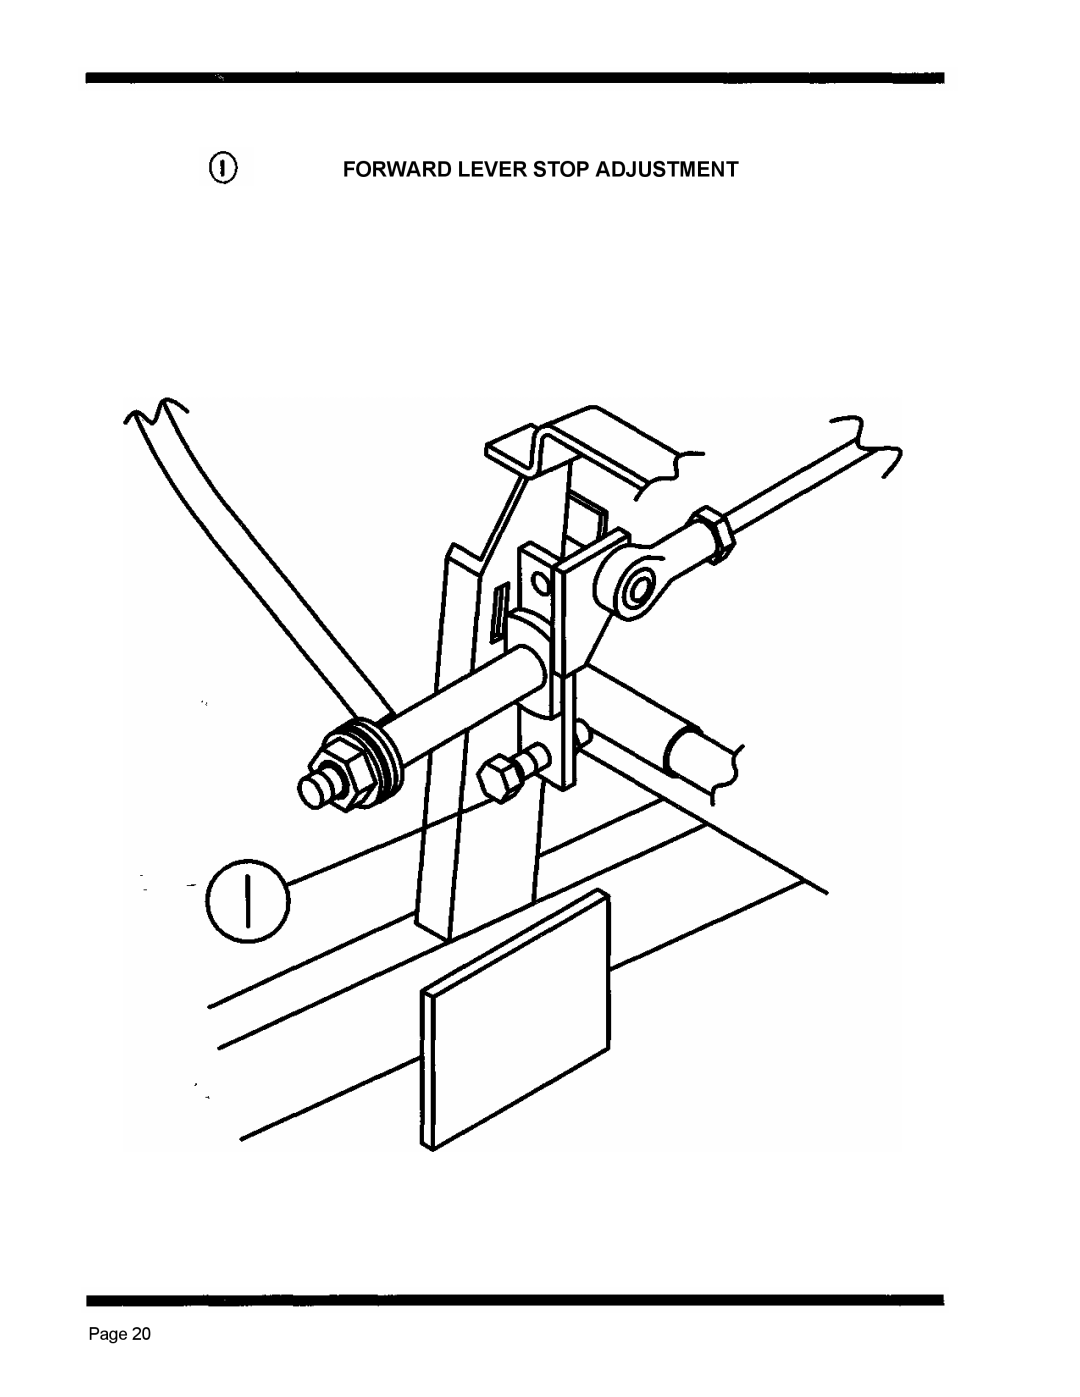 Dixon 5501 manual Forward Lever Stop Adjustment, Page 